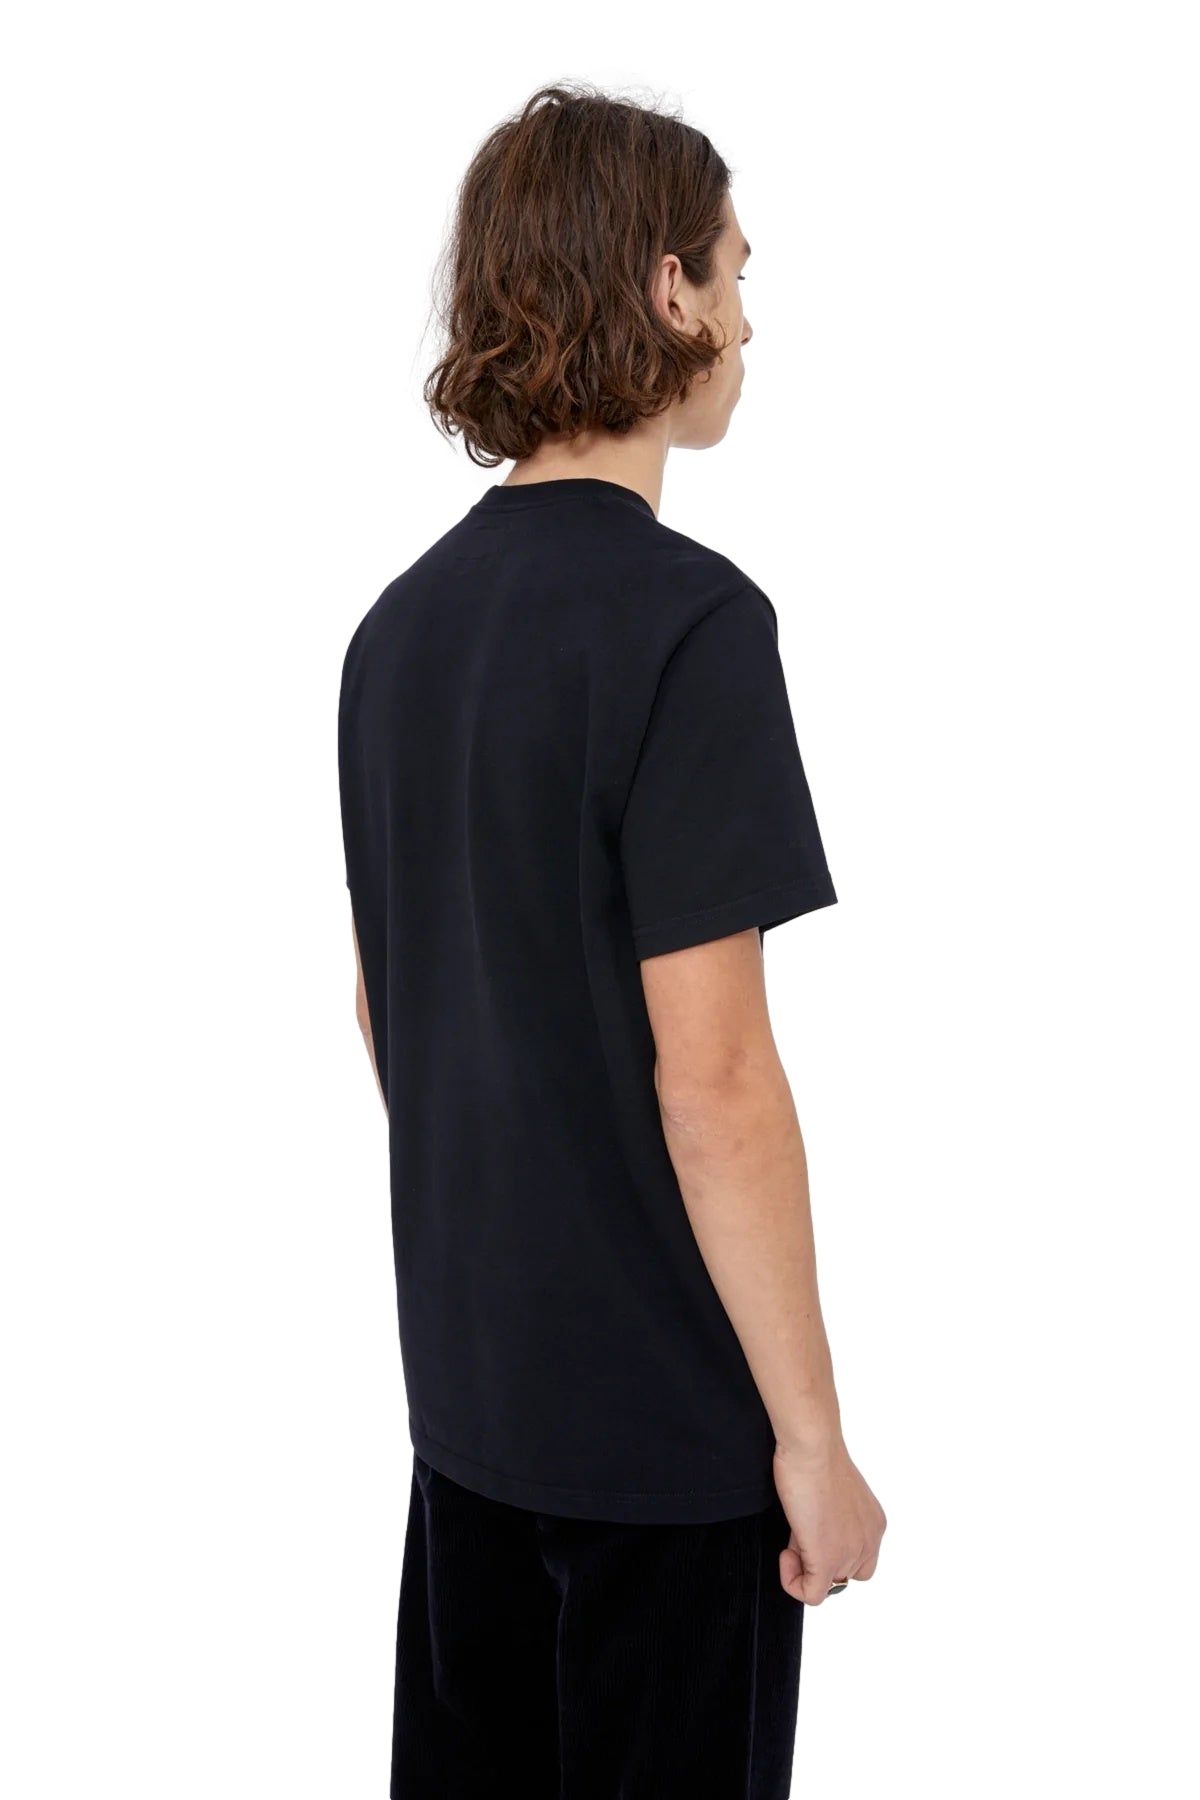 Livid Richmond 2-Pack Black T-shirt Sort - modostore.no